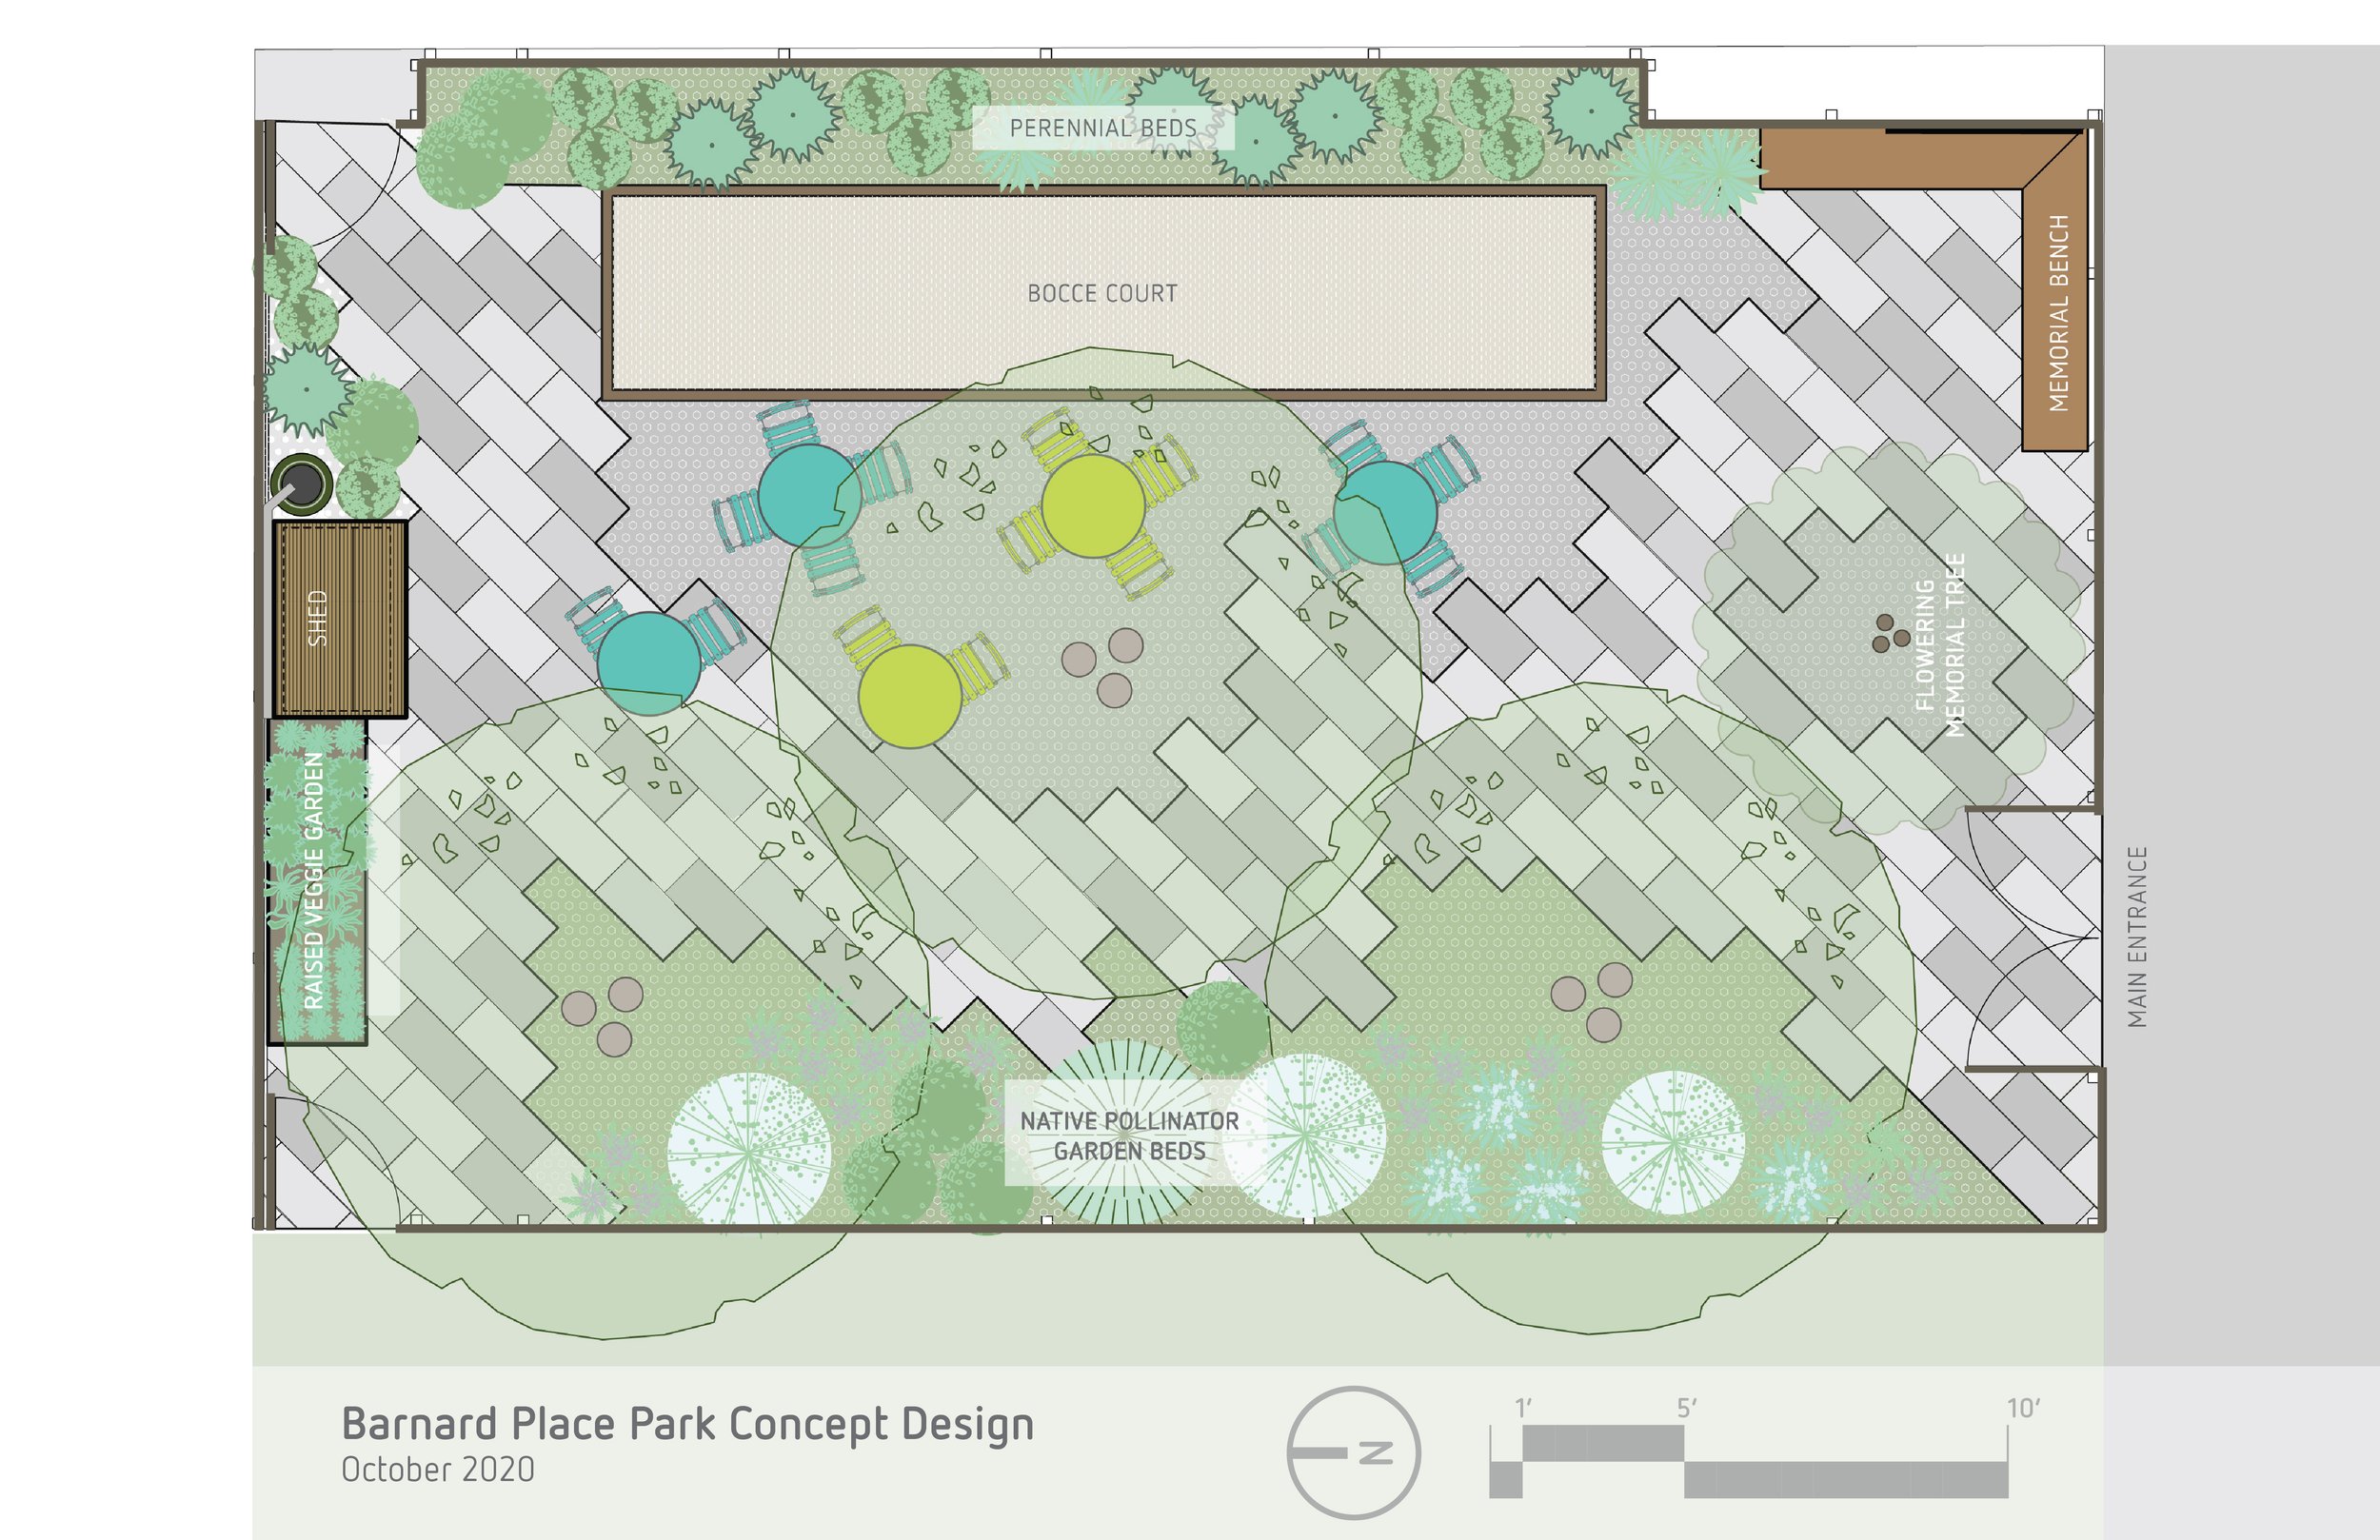 Barnard Place Park Plan View of New Design